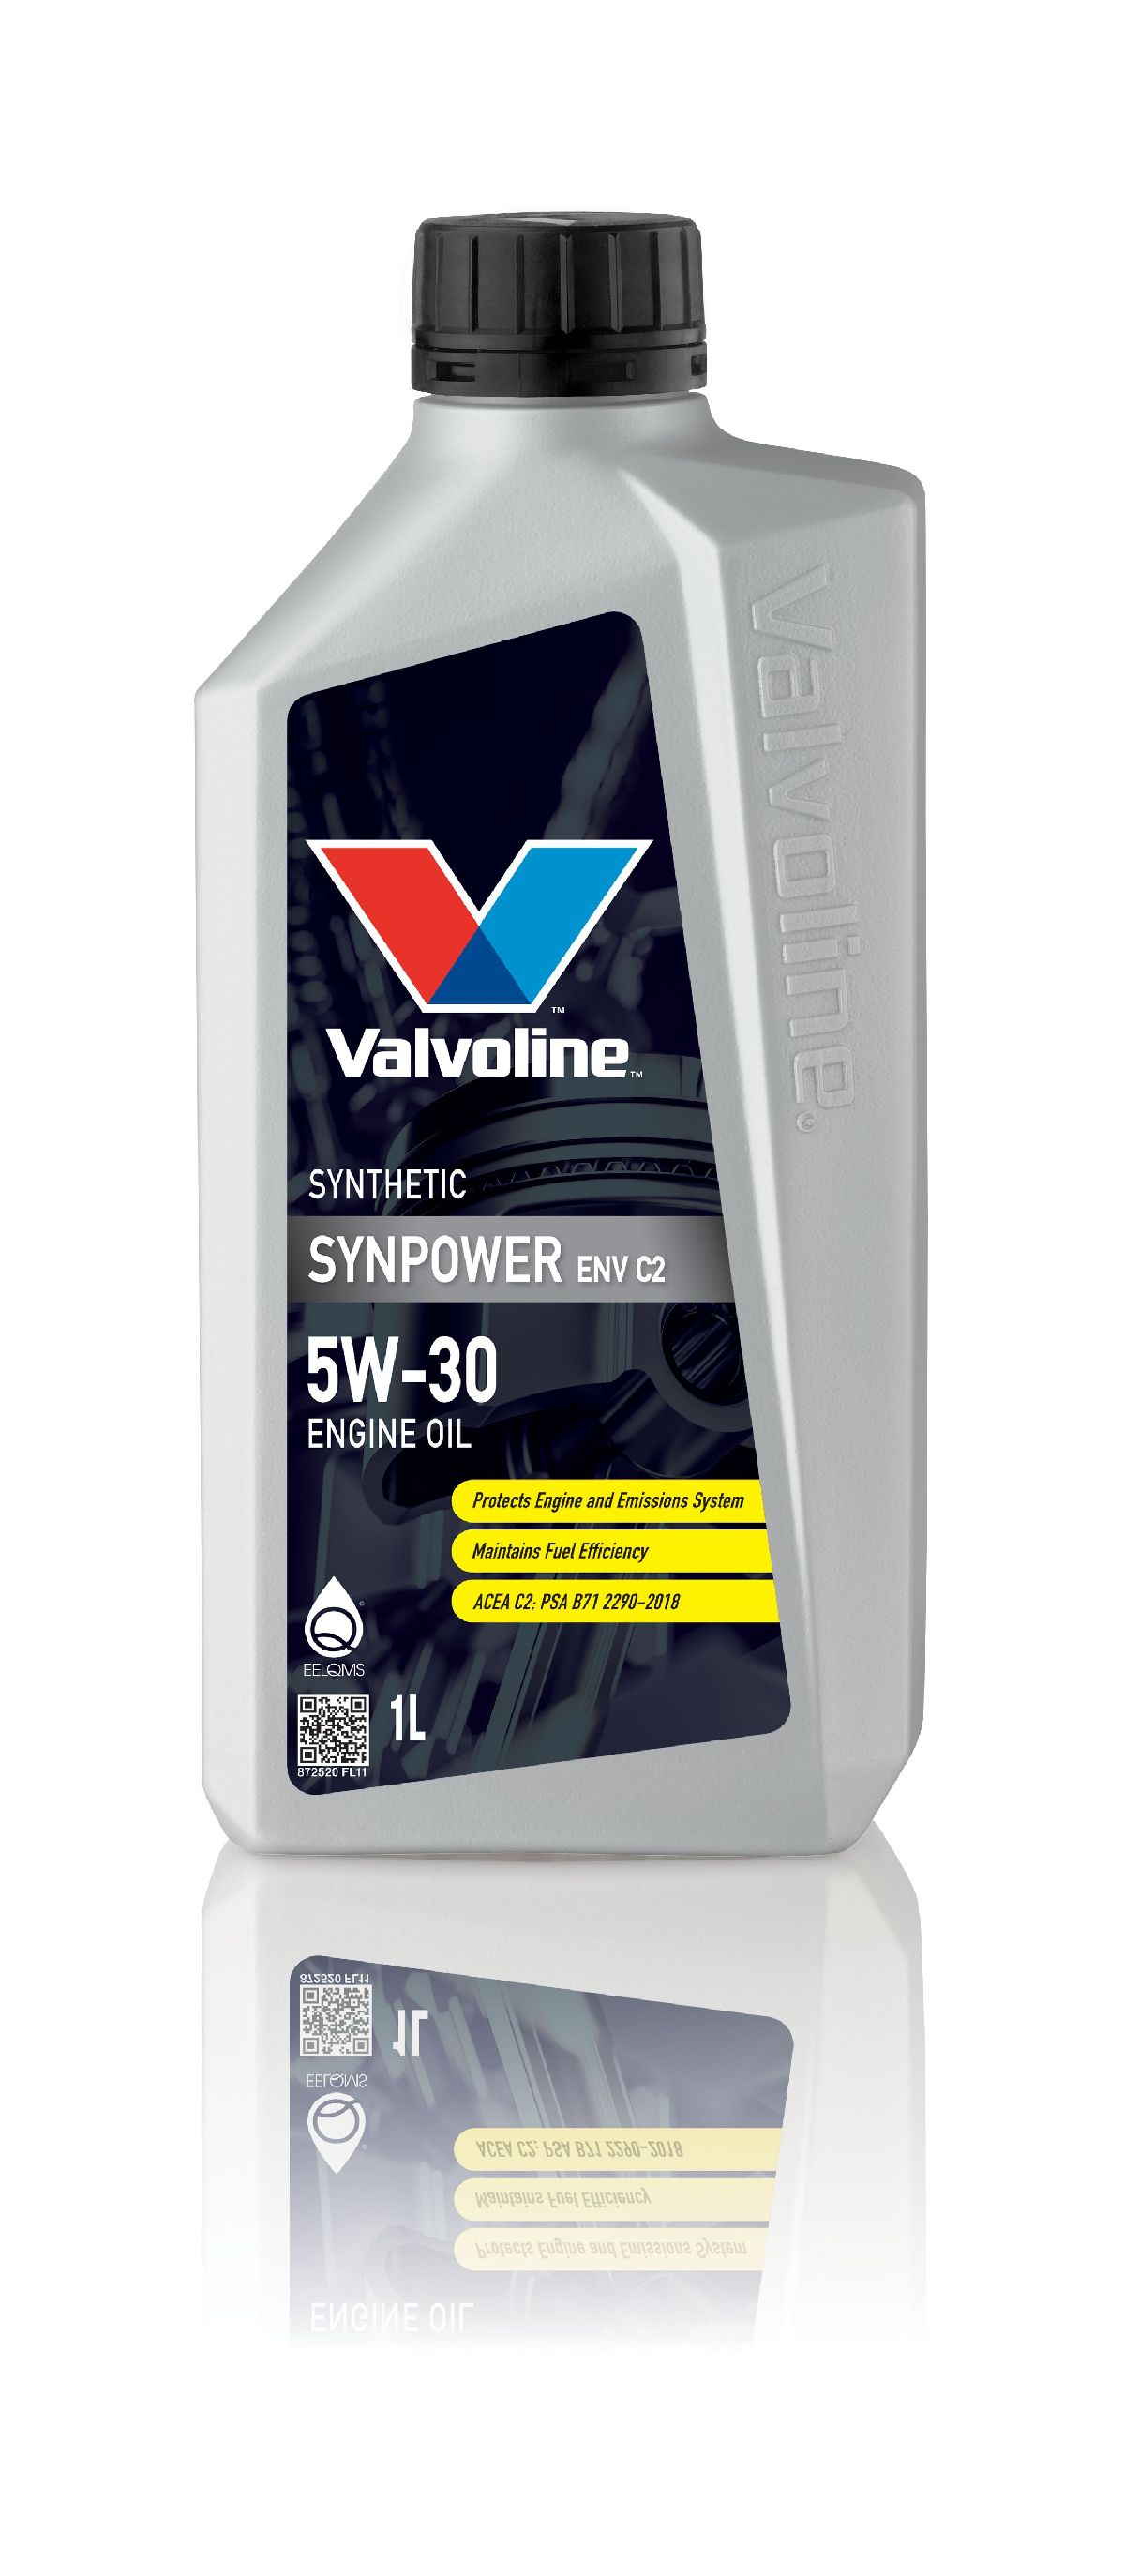 Valvoline Synpower ENV C2 5W-30